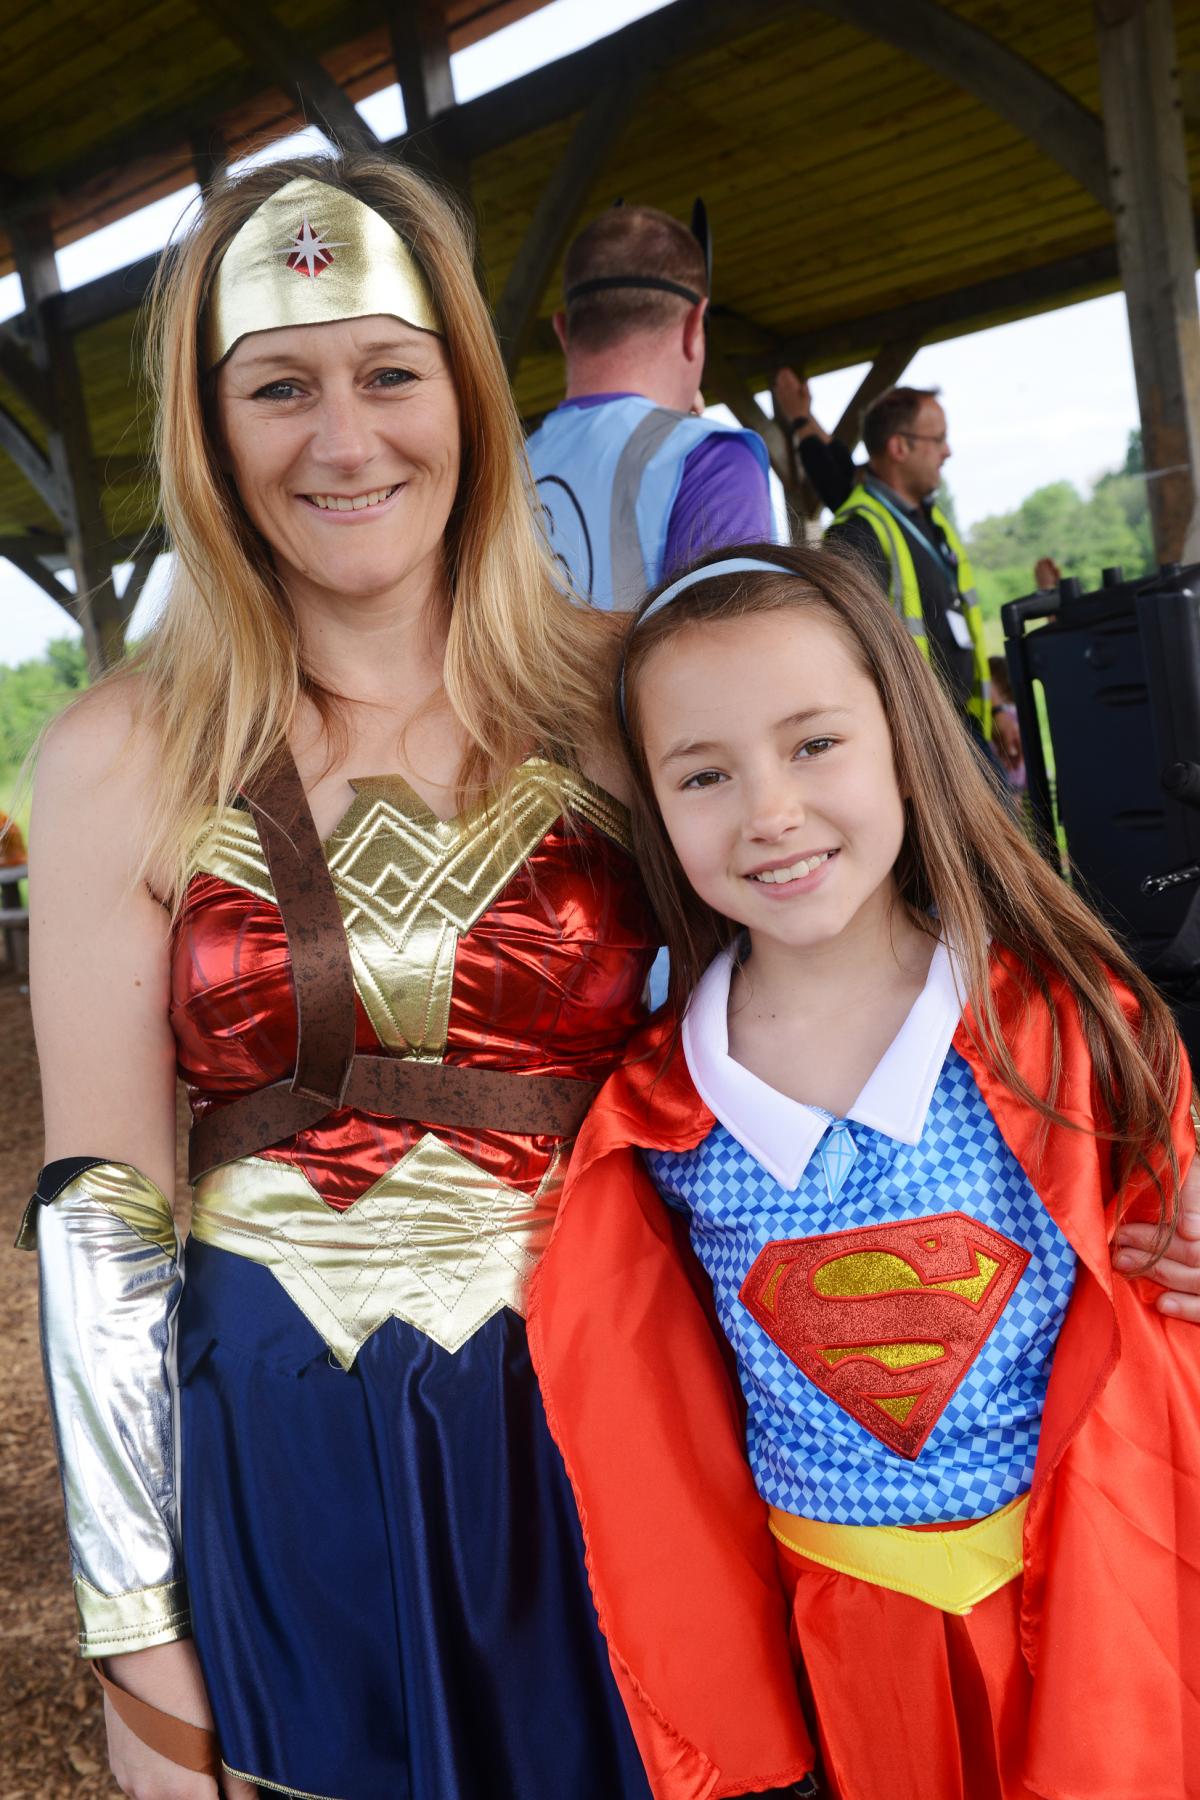 Sandra and Emma Williams got into costume for the event's superhero theme.